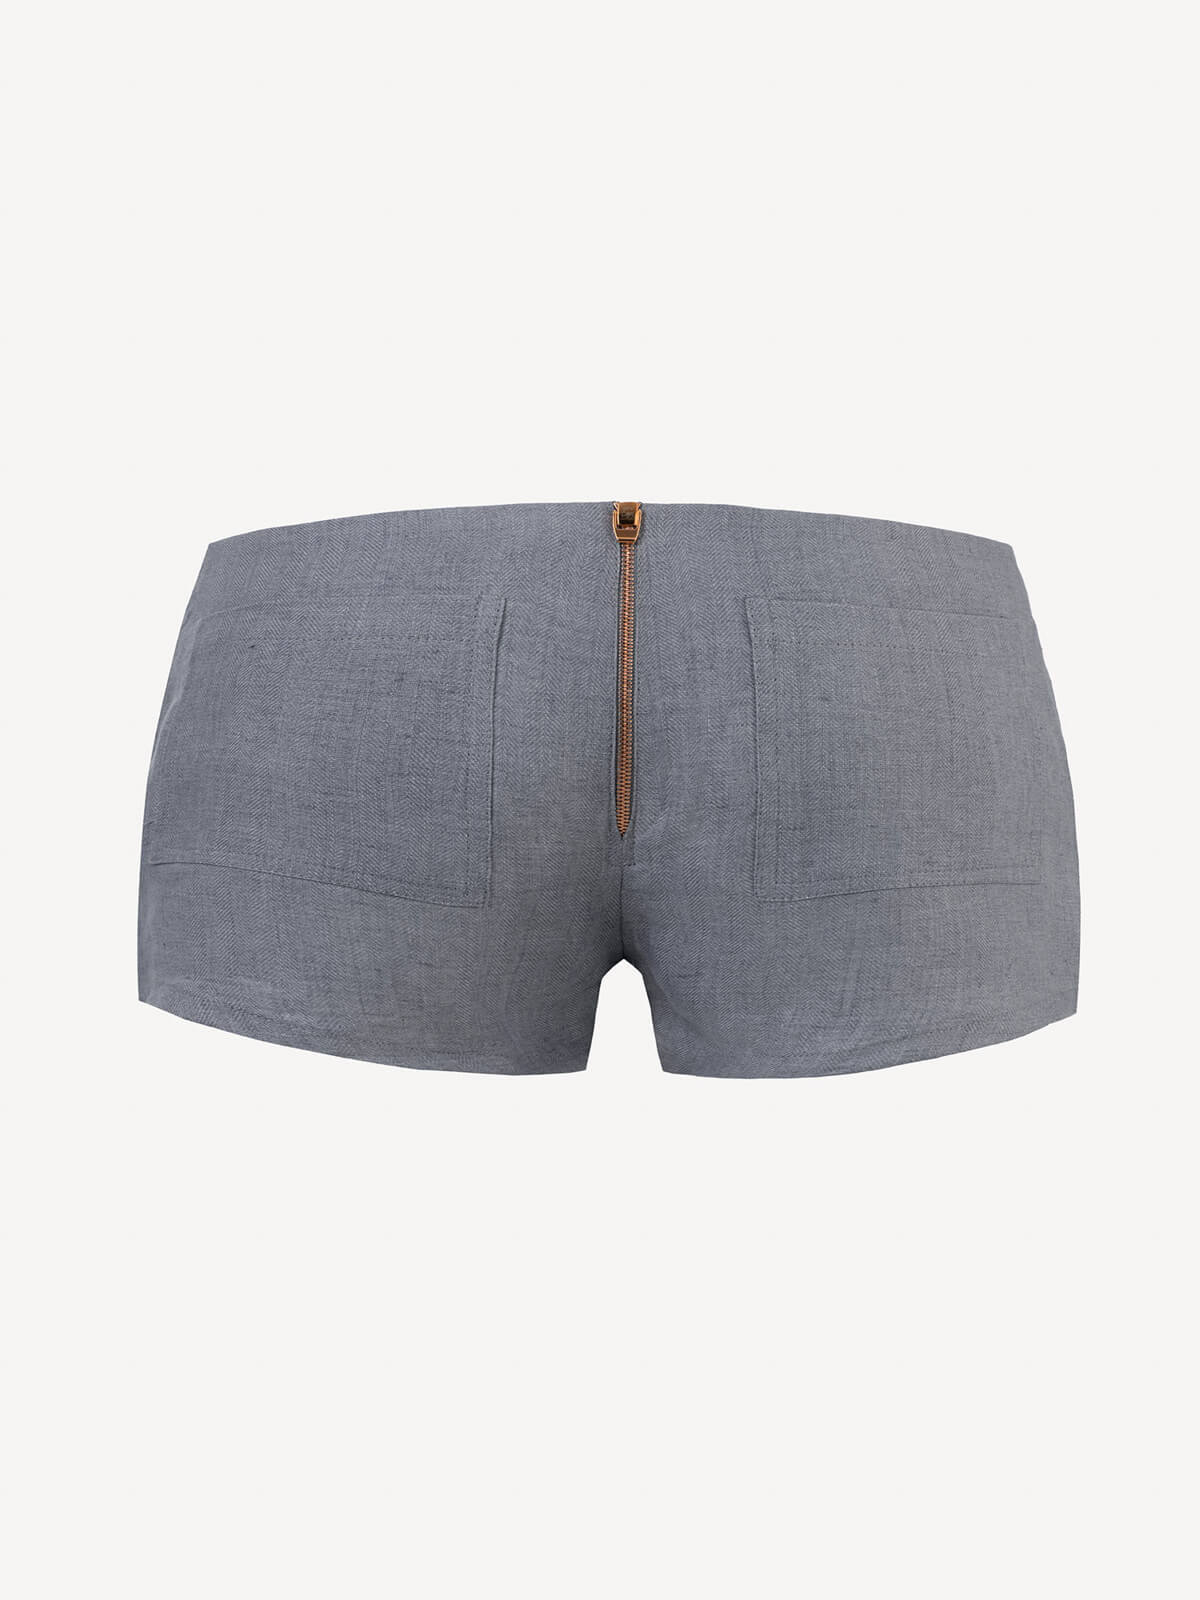 Short linen pants zip  for woman 100% Capri dark grey linen pant back